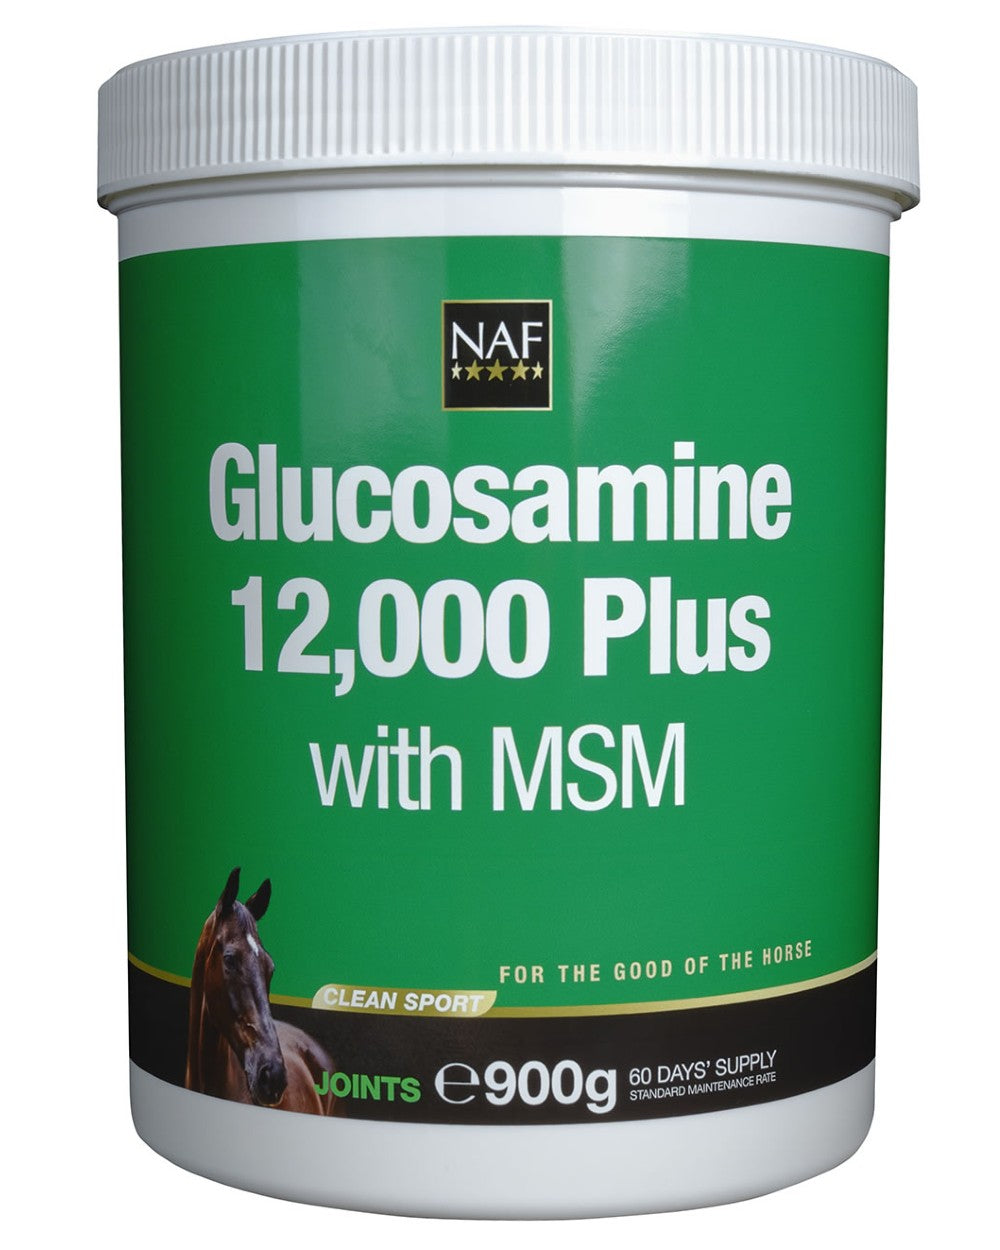 NAF Glucosamine 12,000 Plus With Msm 900g on white background